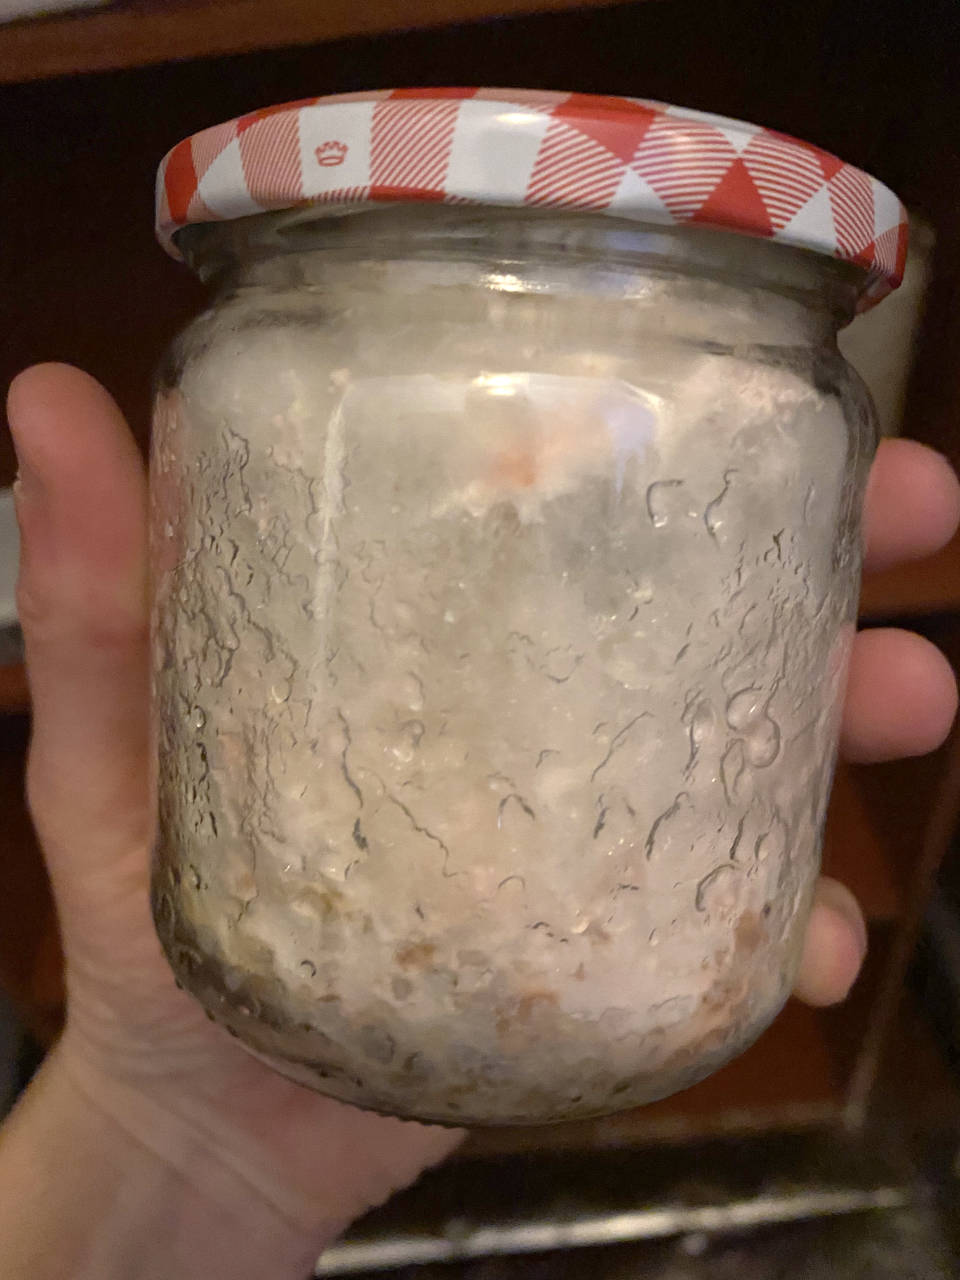 Fluffy pink oyster mycelium in a jar